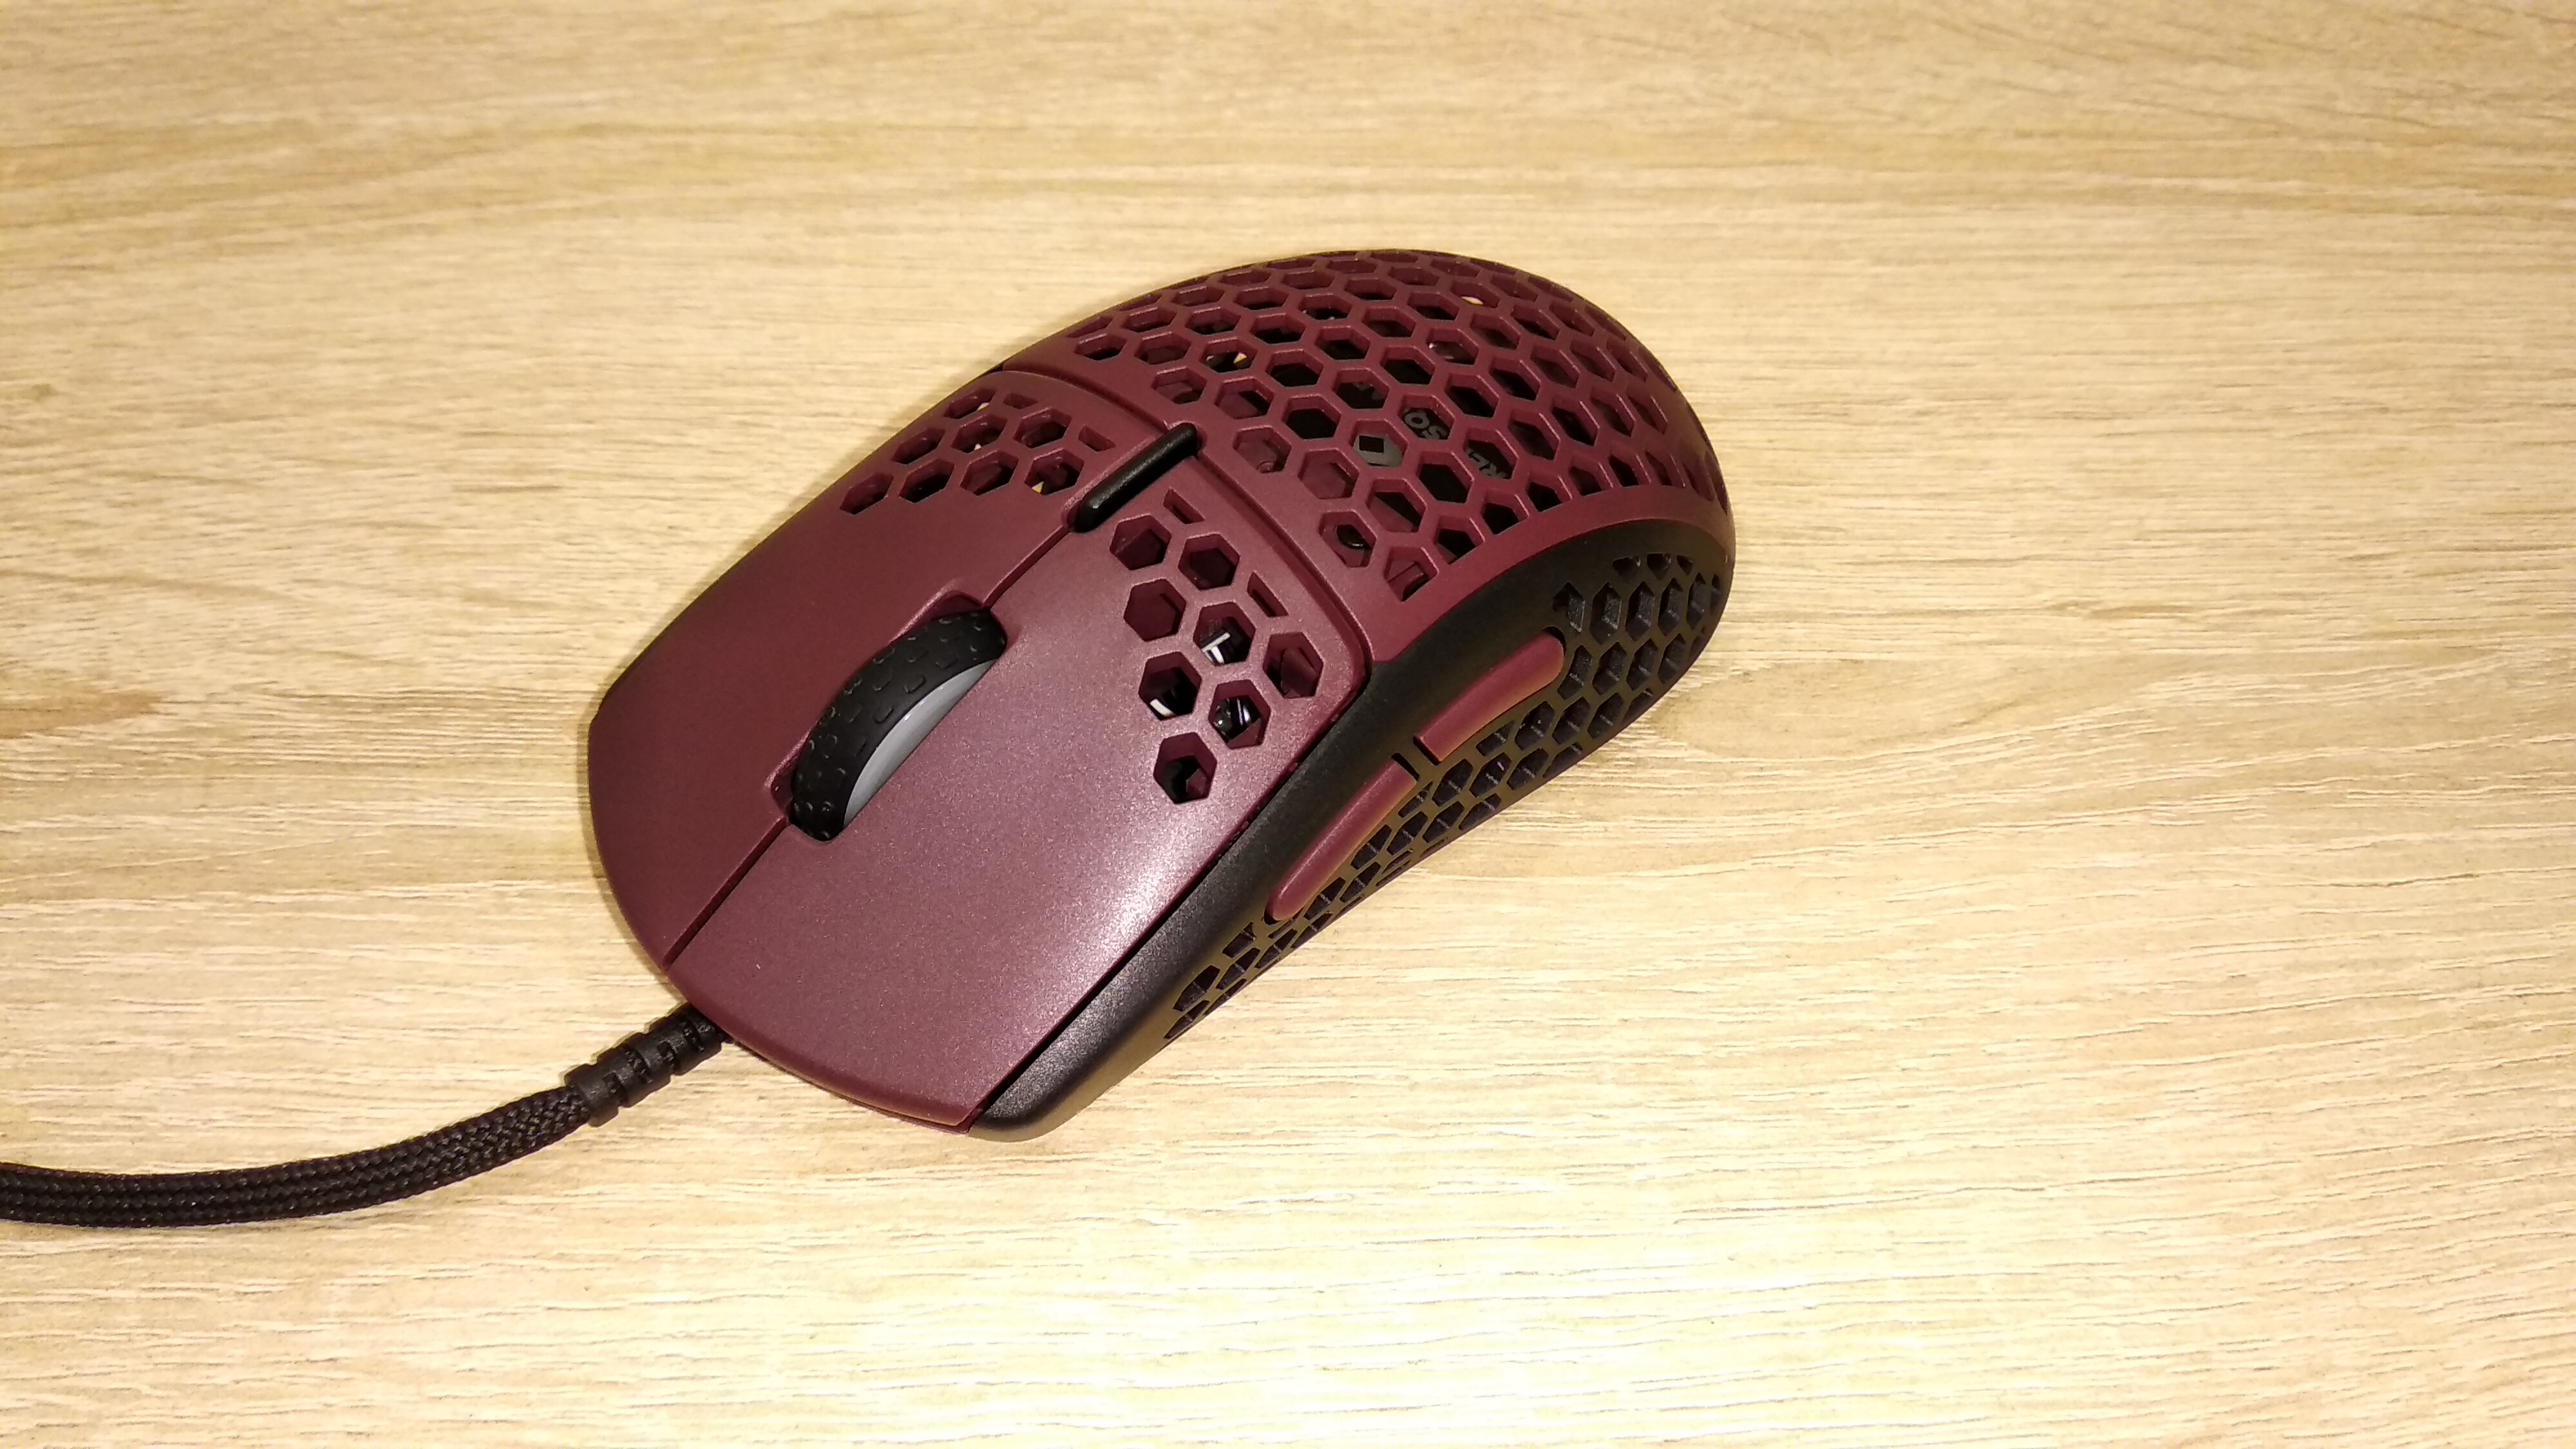 Беспроводная мышь io by red square. Мышка Red Square o2. Red Square o2 rs122 мышь. Проводная игровая мышь Red Square o2. Клавиатура в виде мышки.